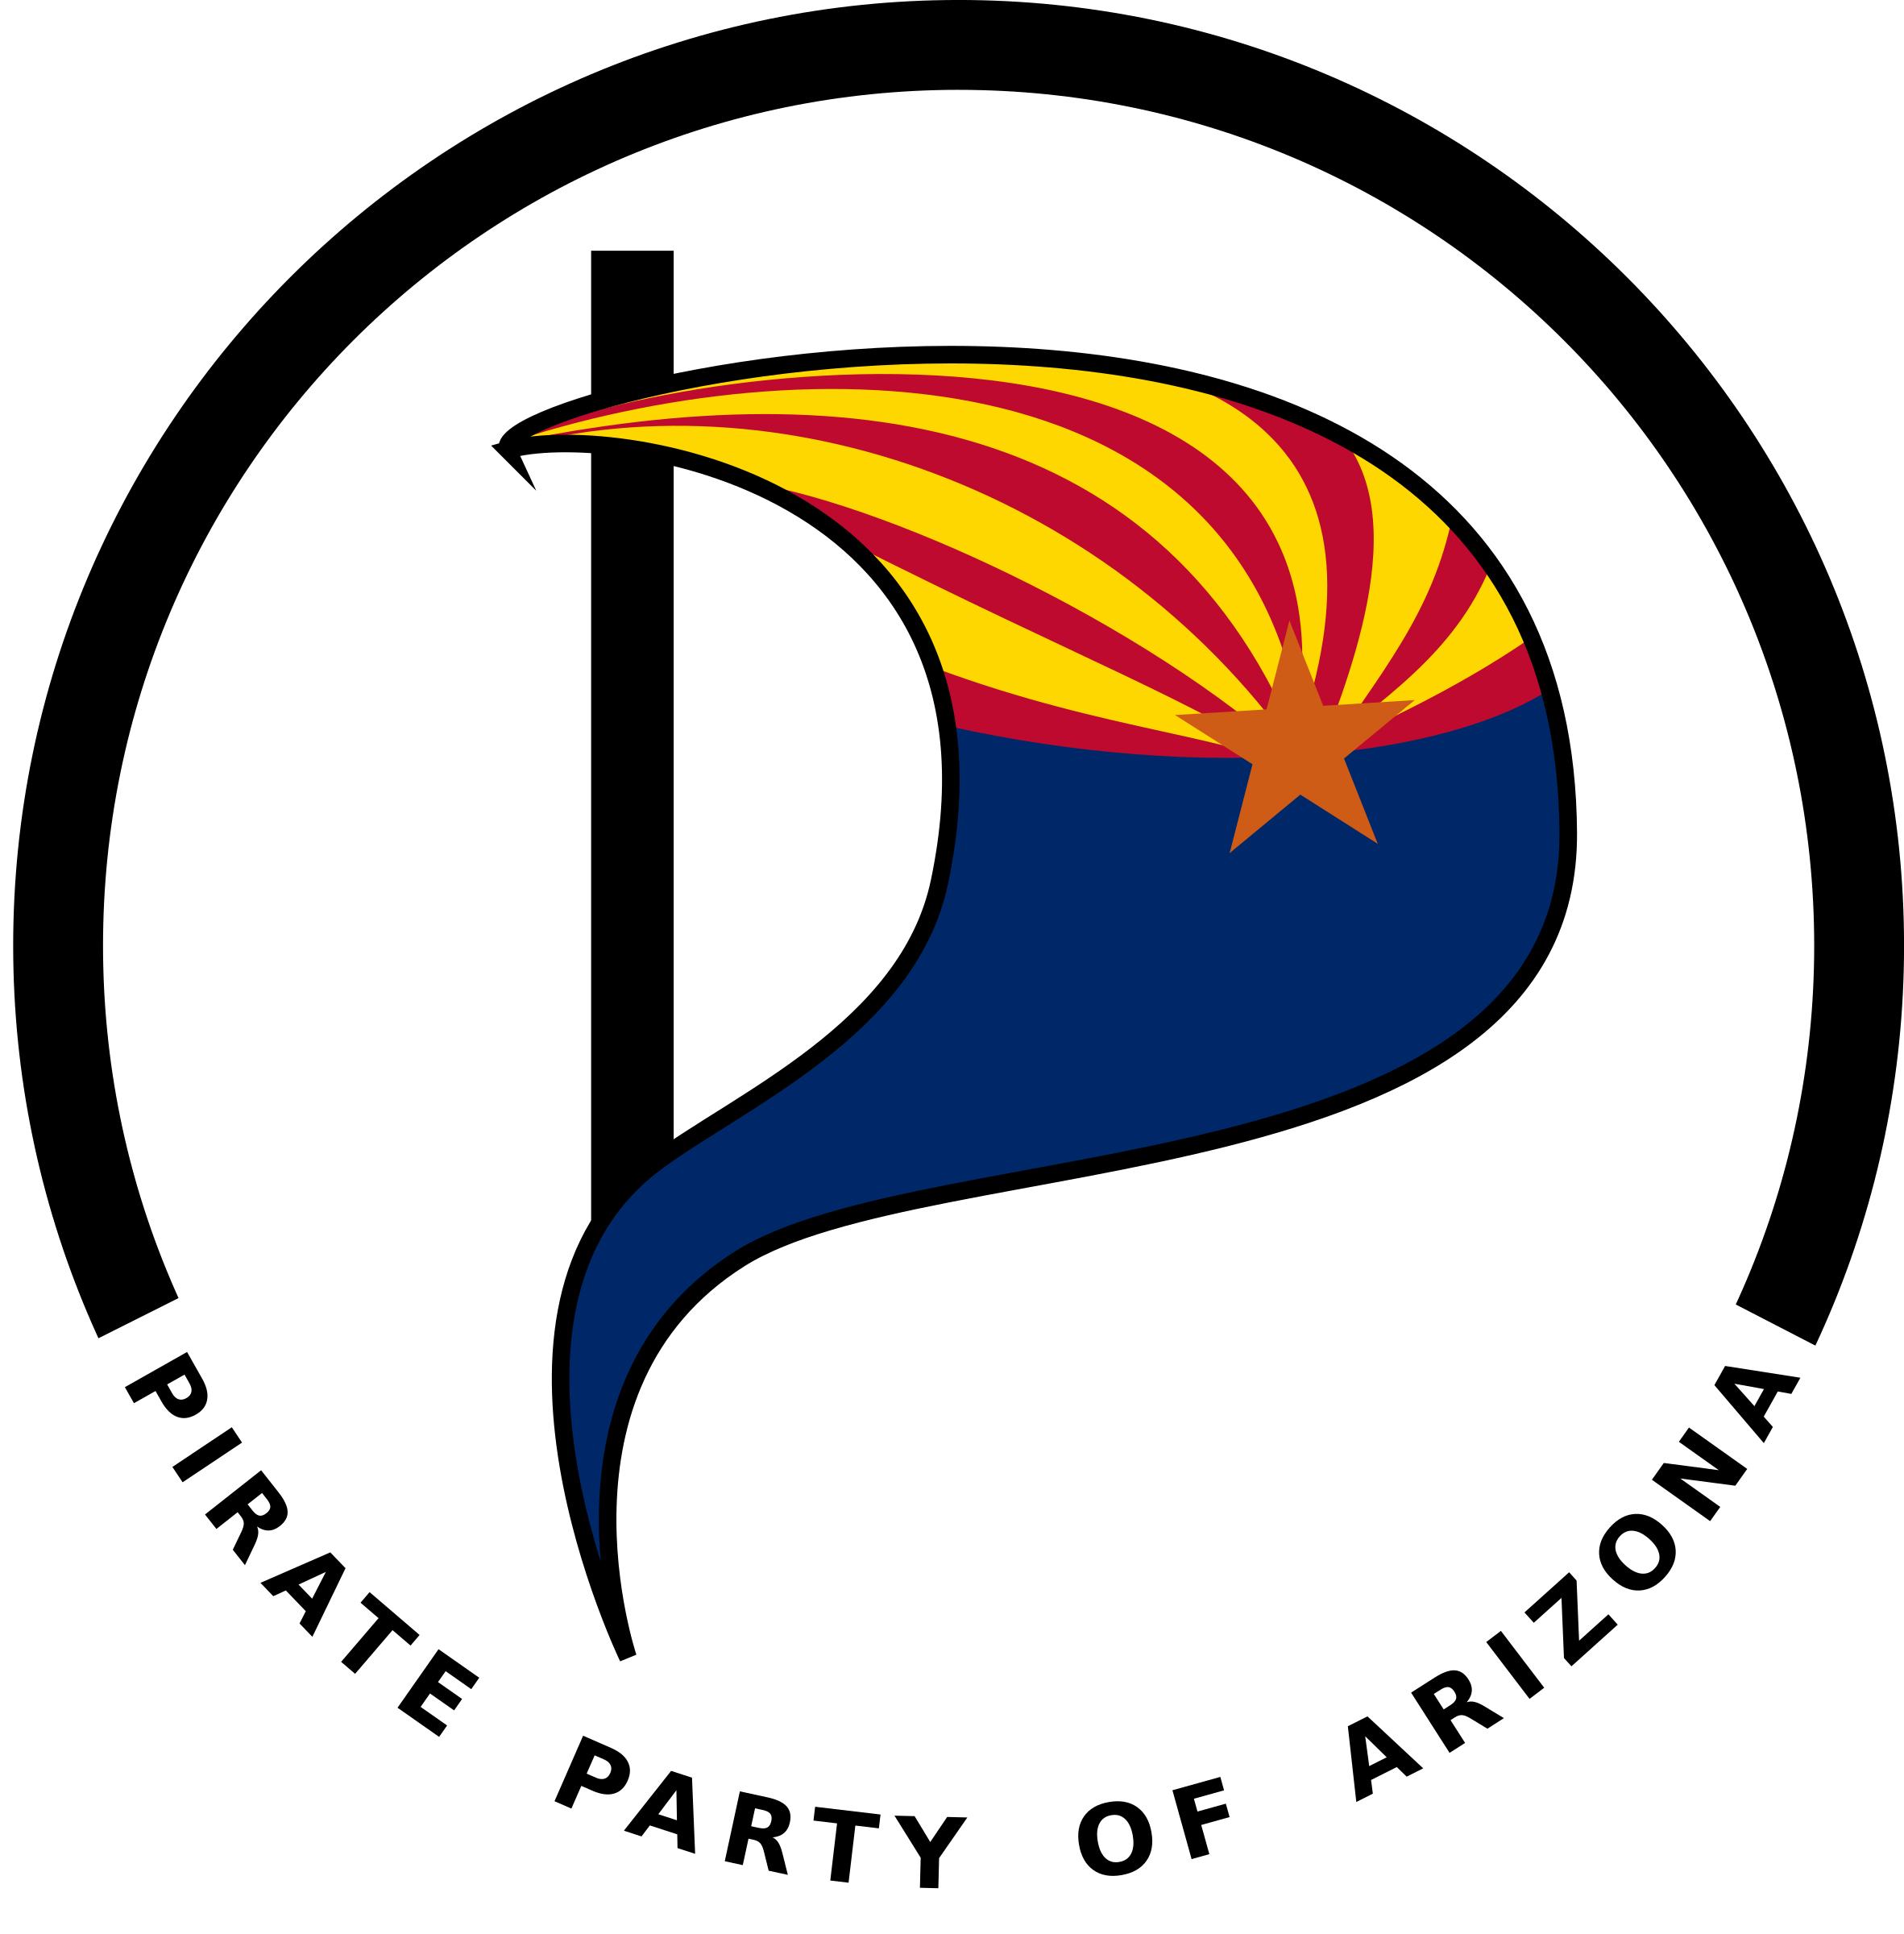 Pirate Party of Arizona logo png